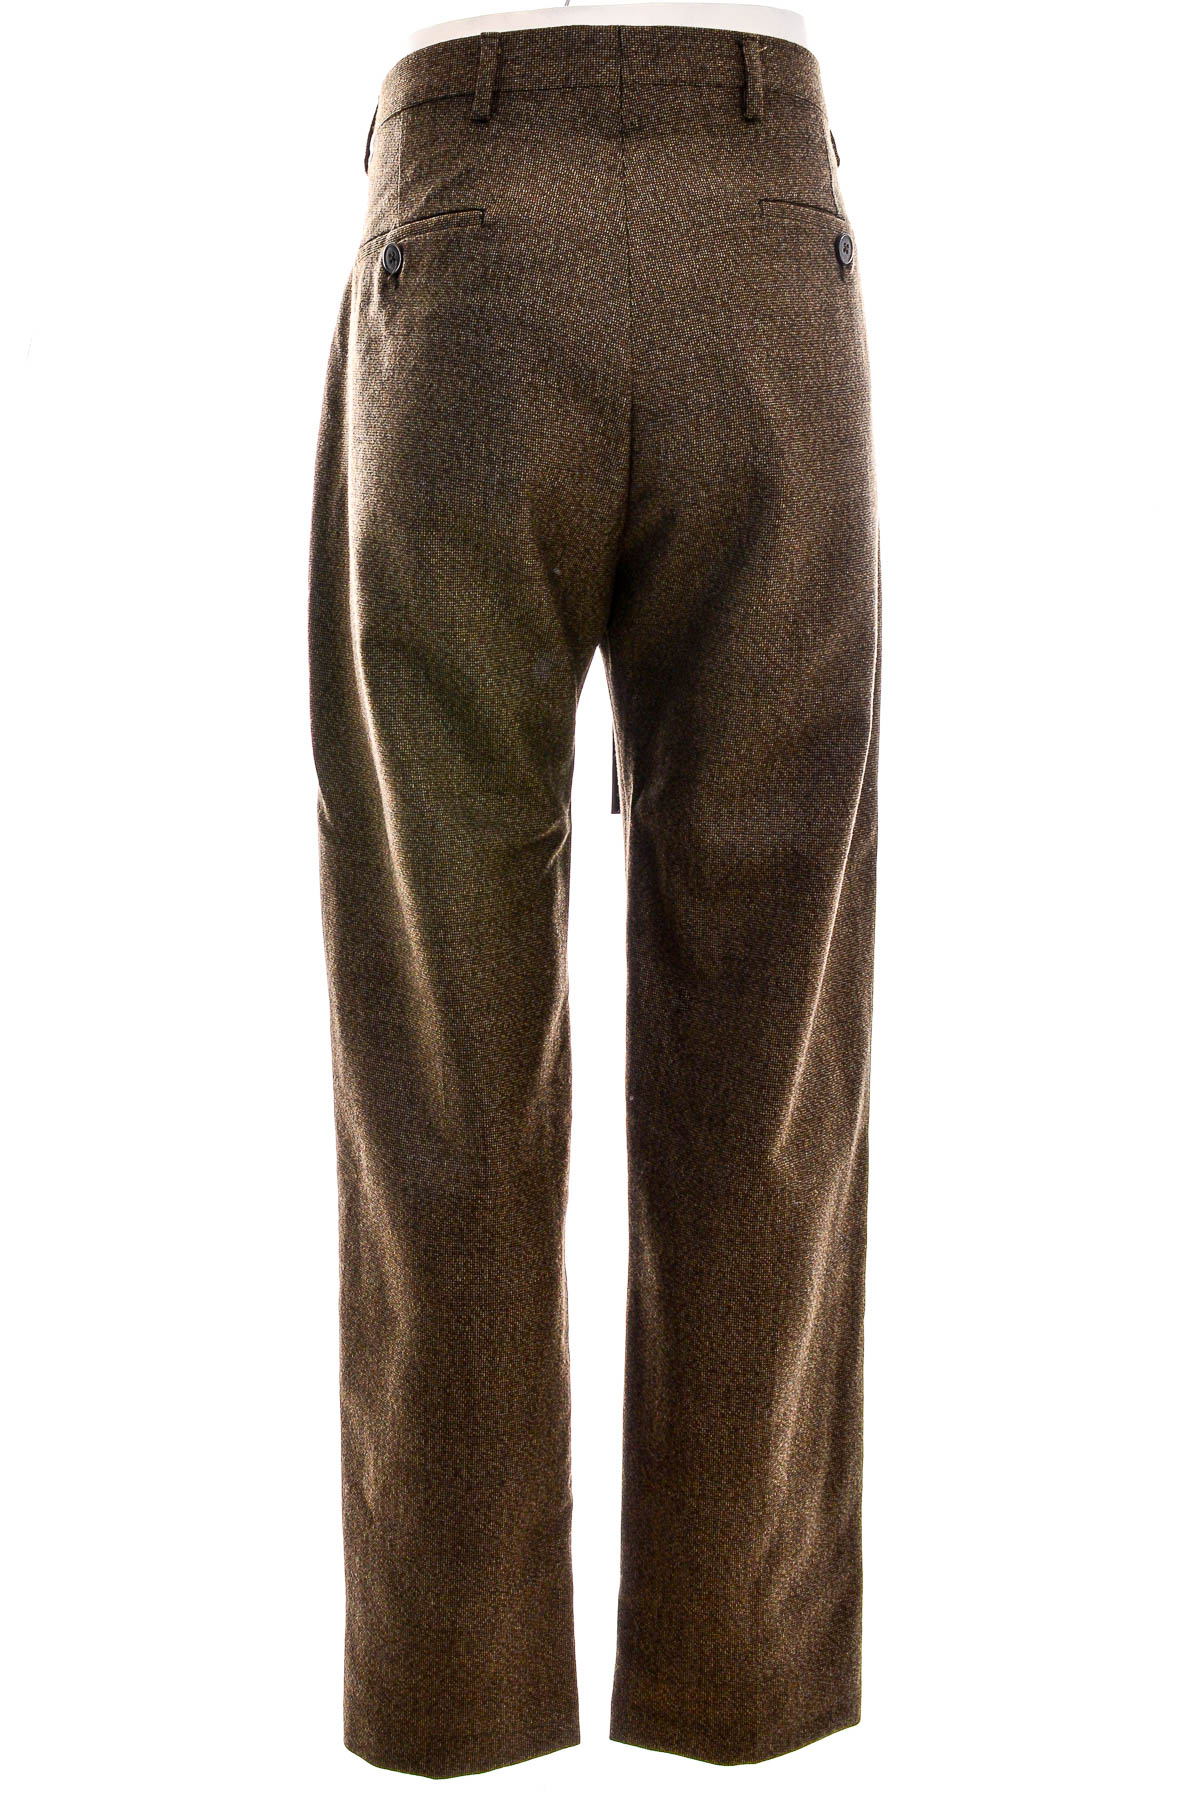 Men's trousers - BRIAN DALES - 1